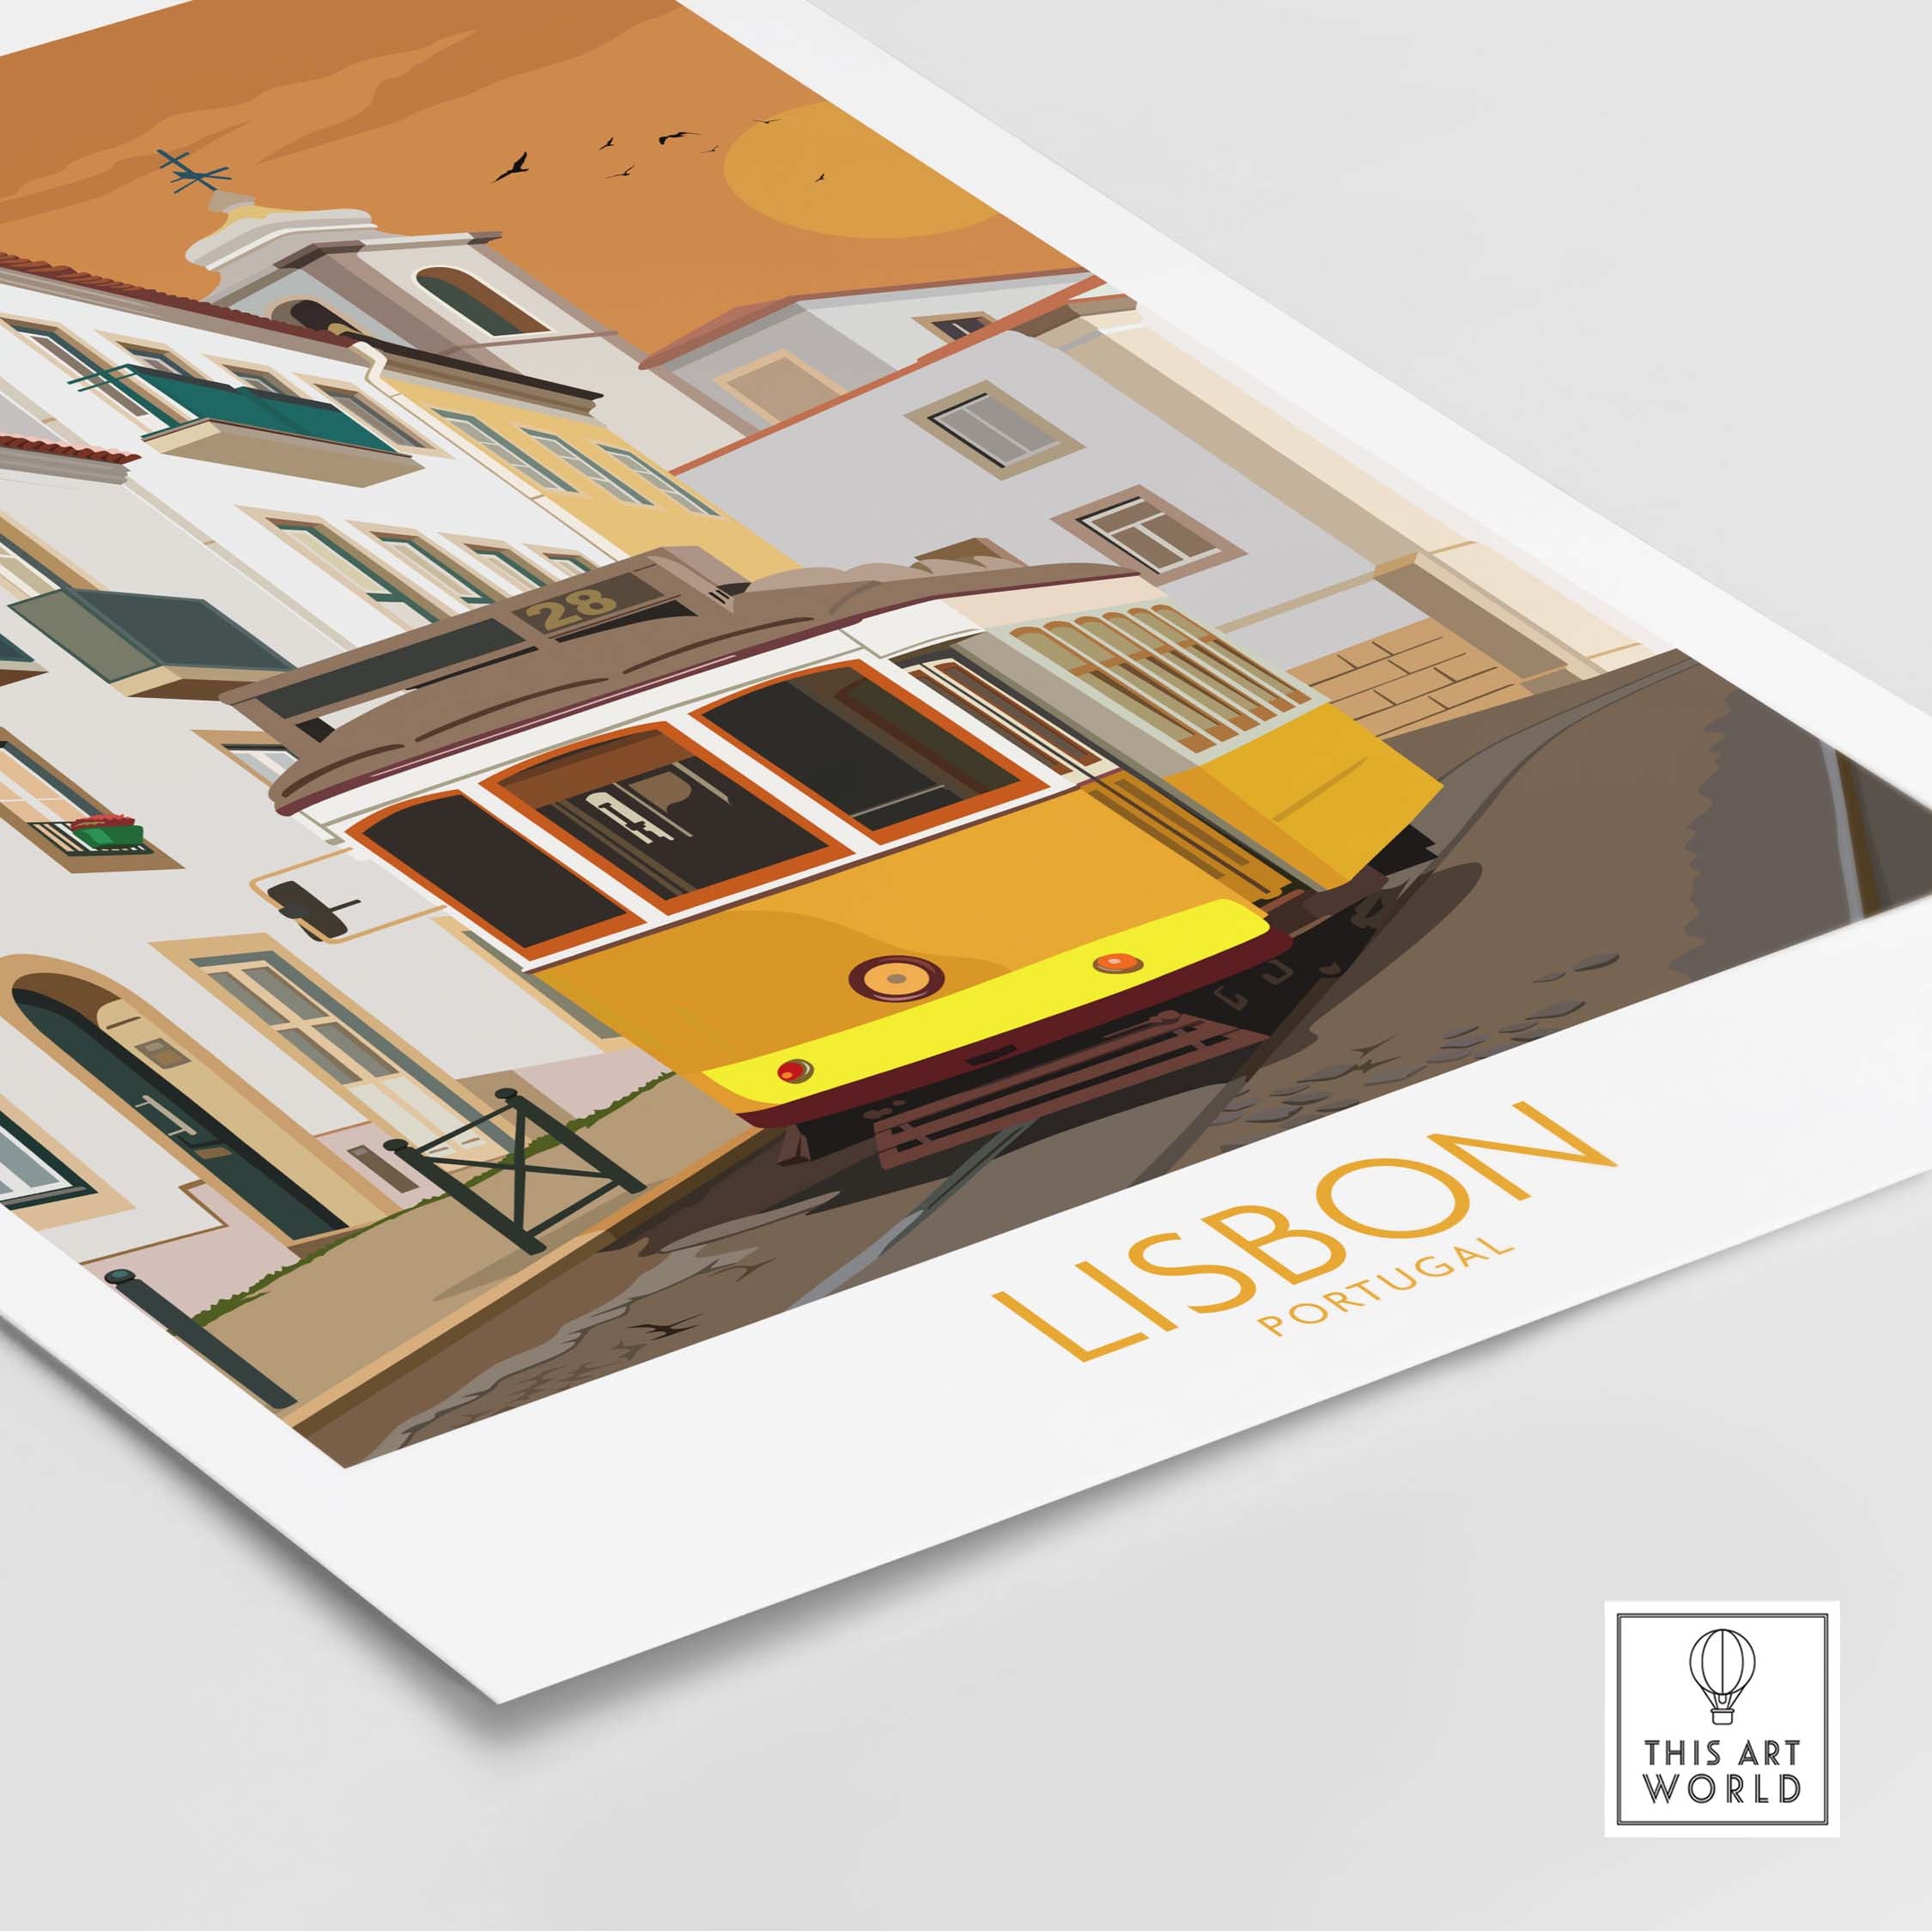 lisbon poster portugal print